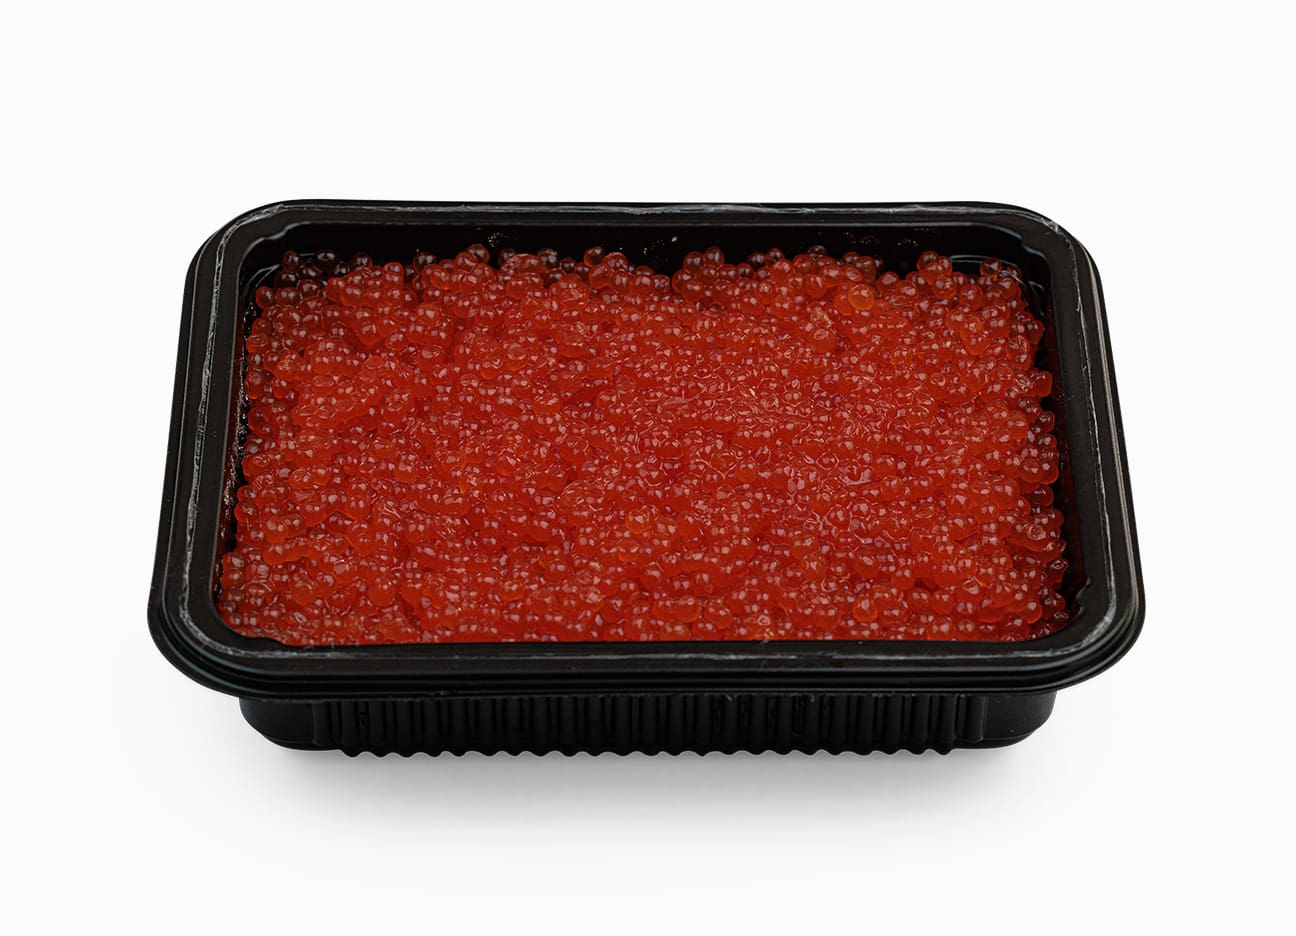 Wild Alaskan Salmon Red Caviar Peter Pan Grade 2 35.2 oz in an open package.